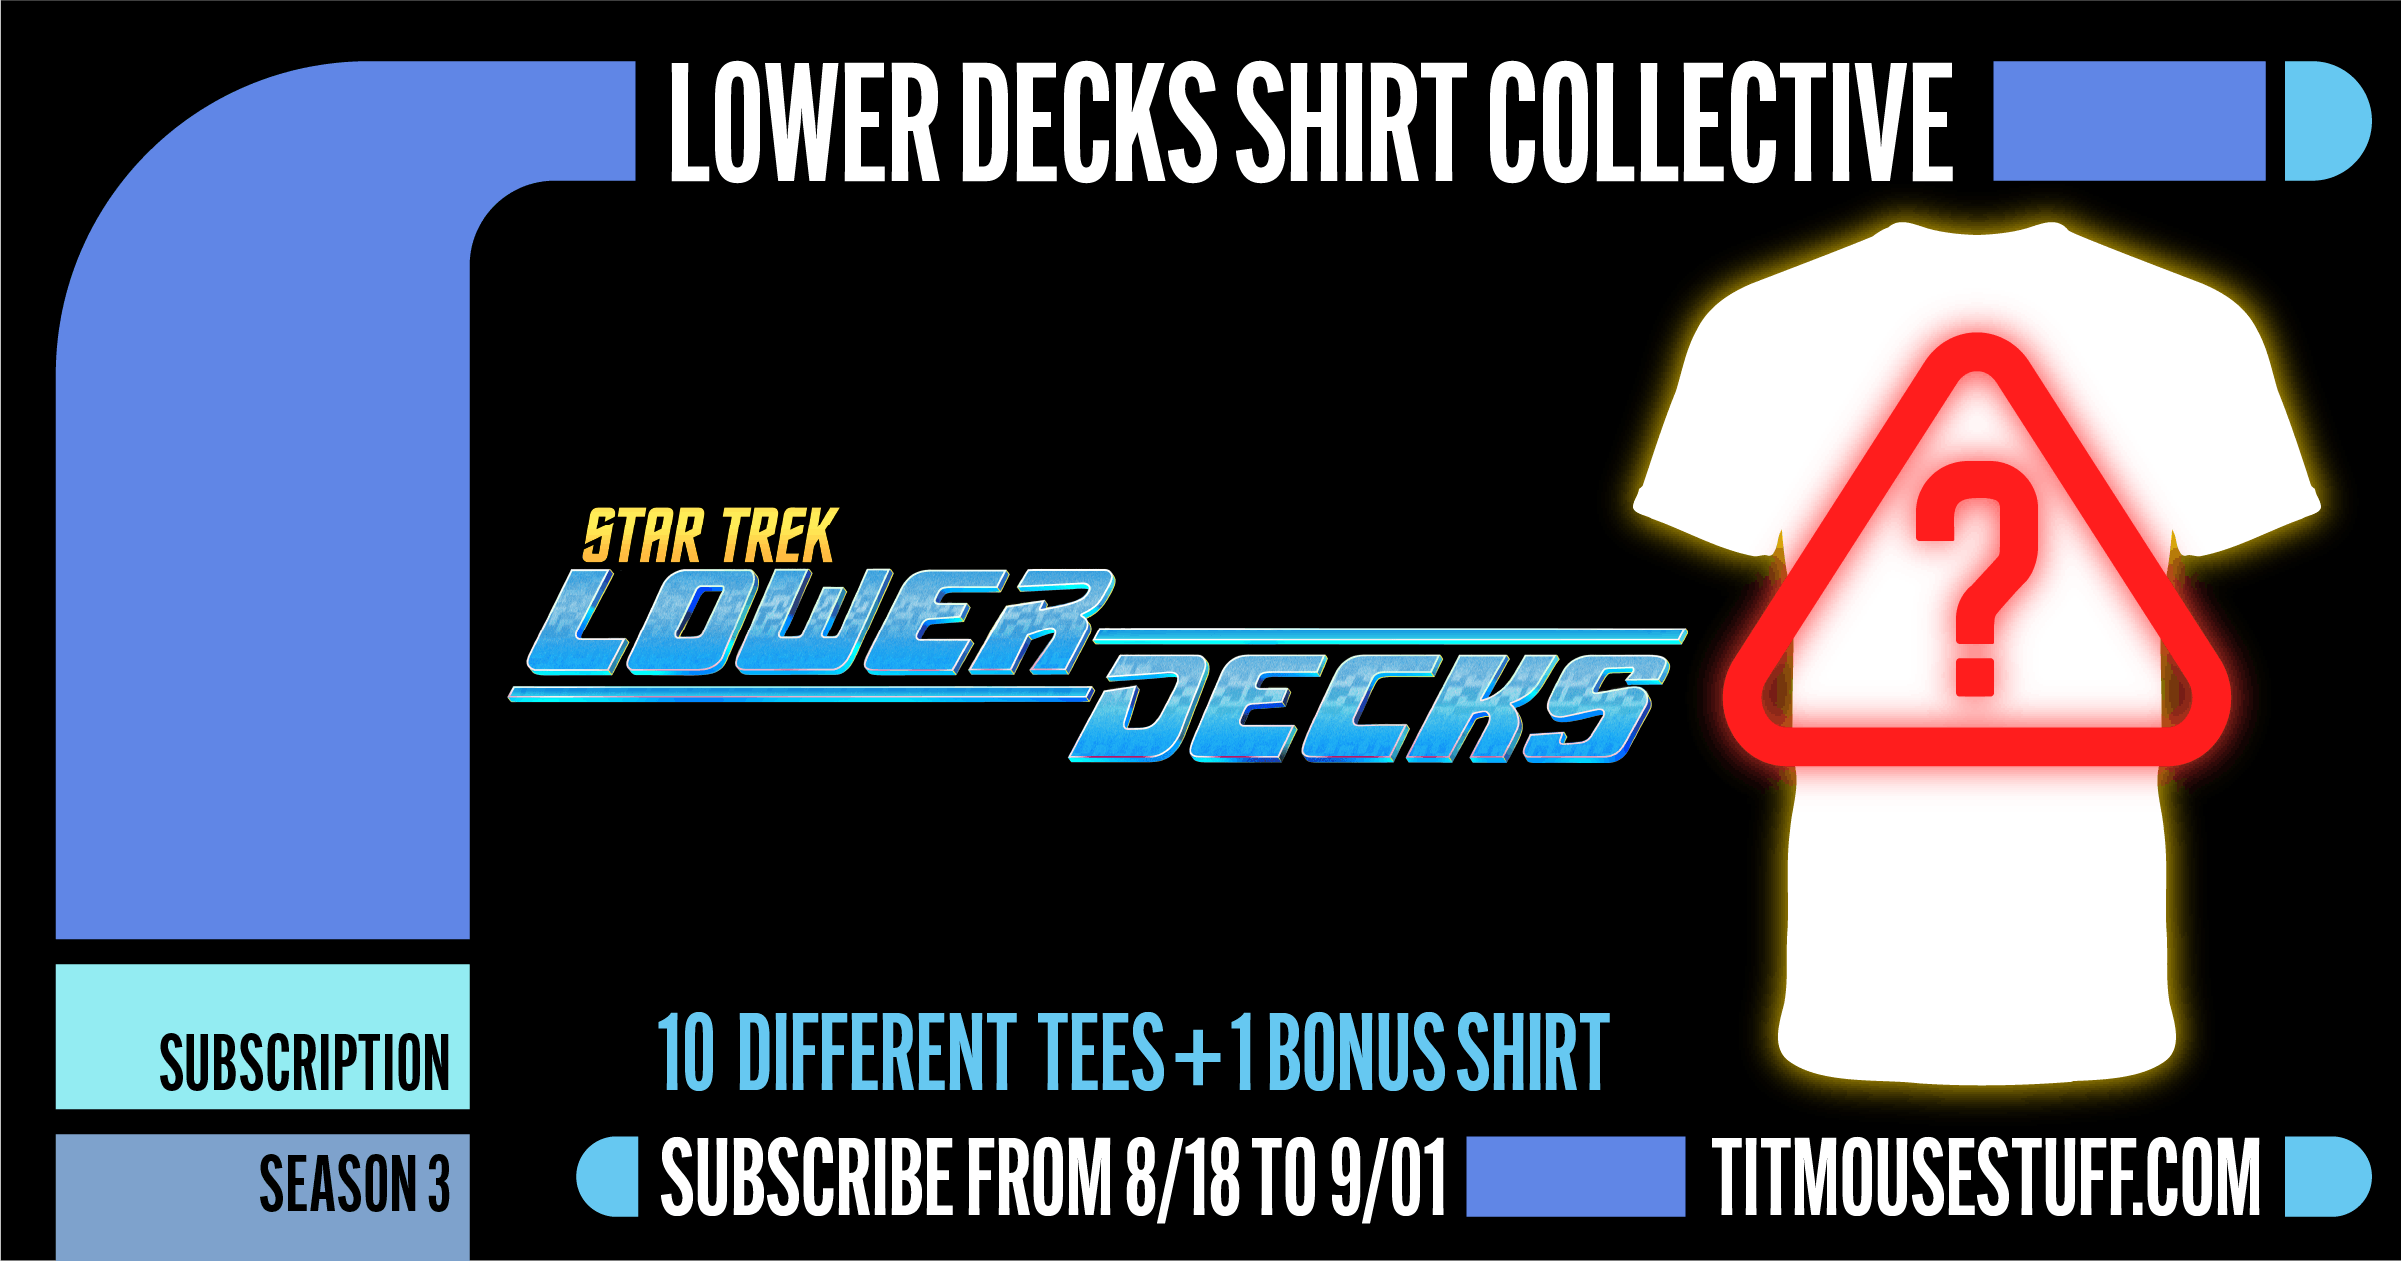 Star Trek: Lower Decks T-Shirt Collective - Full Subscription